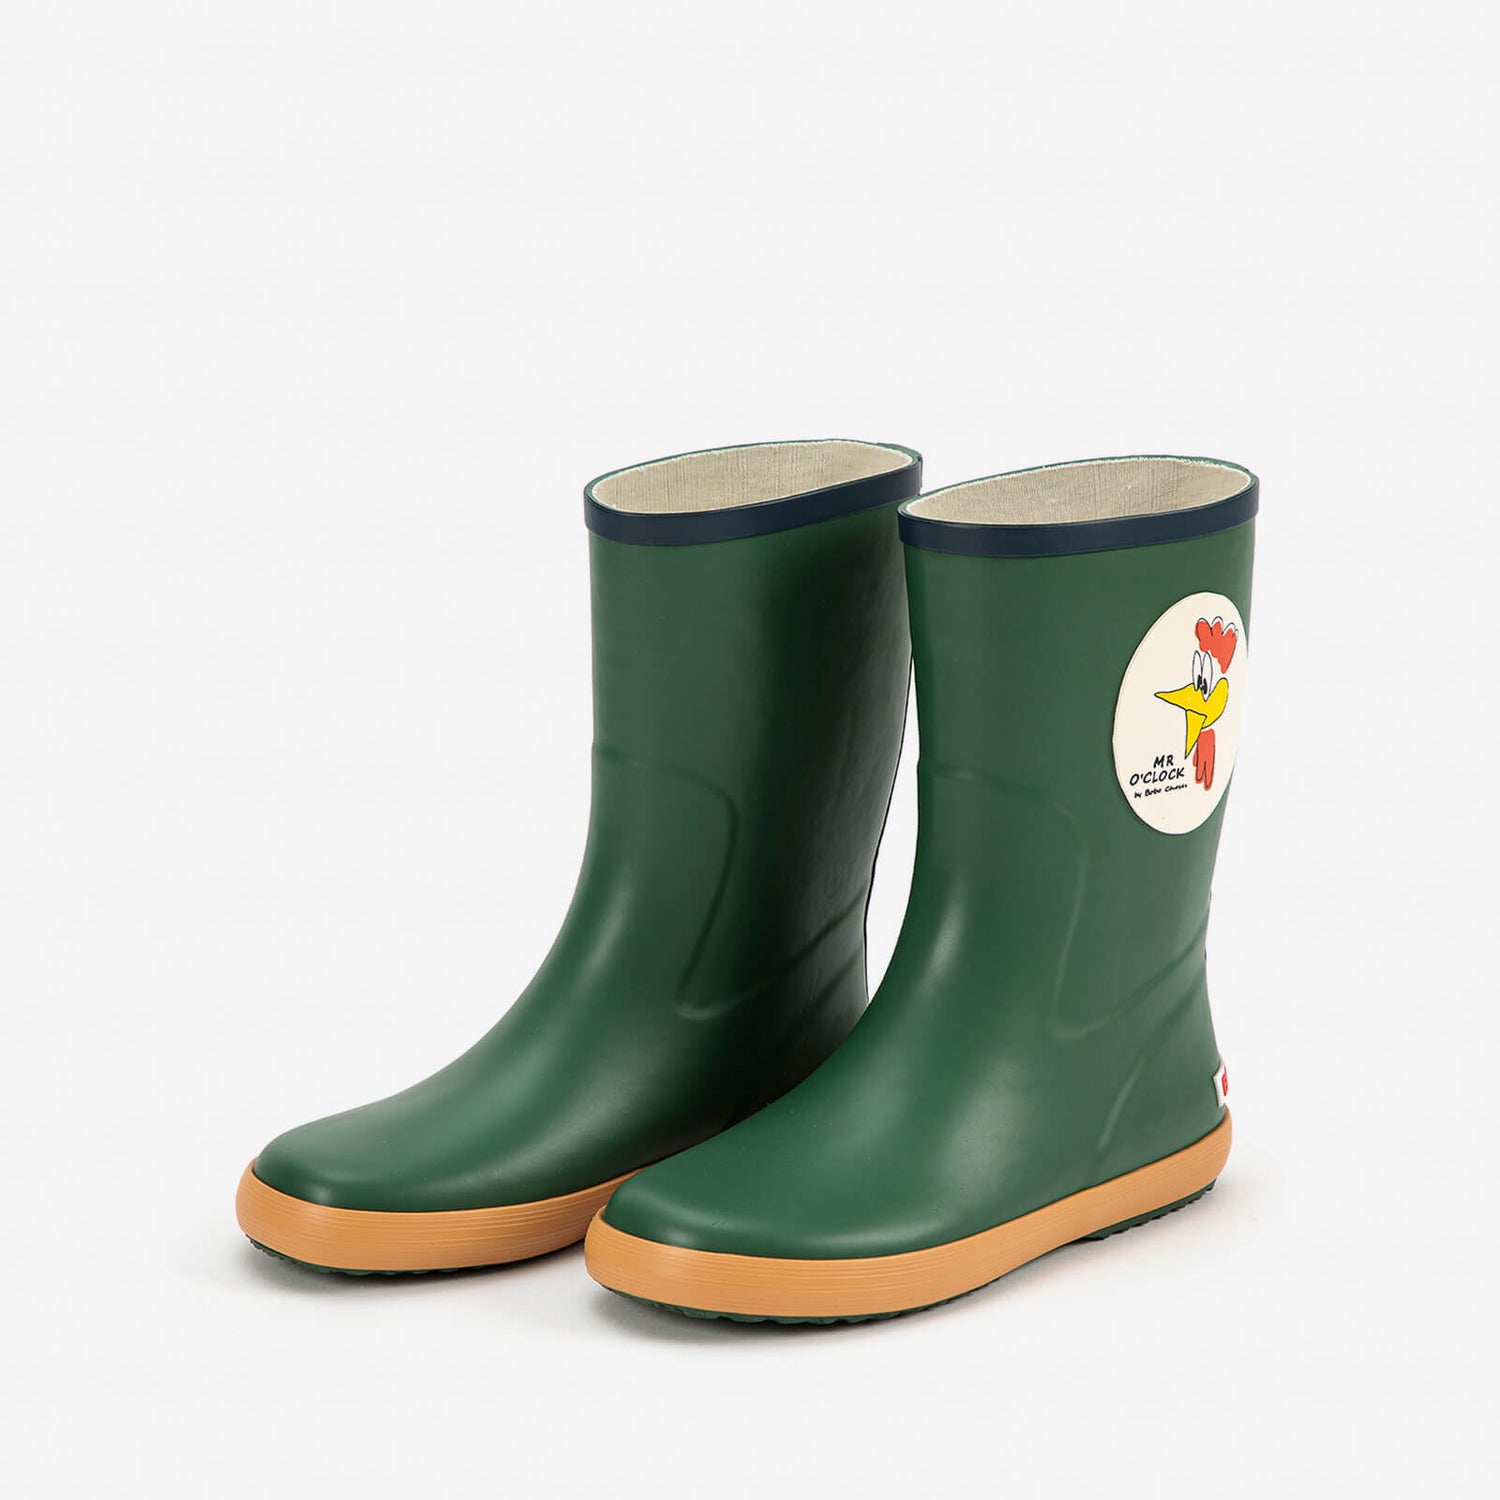 BoBo Choses Kids' Mr O'Clock Rubber Wellington Boots - UK 7 Toddler